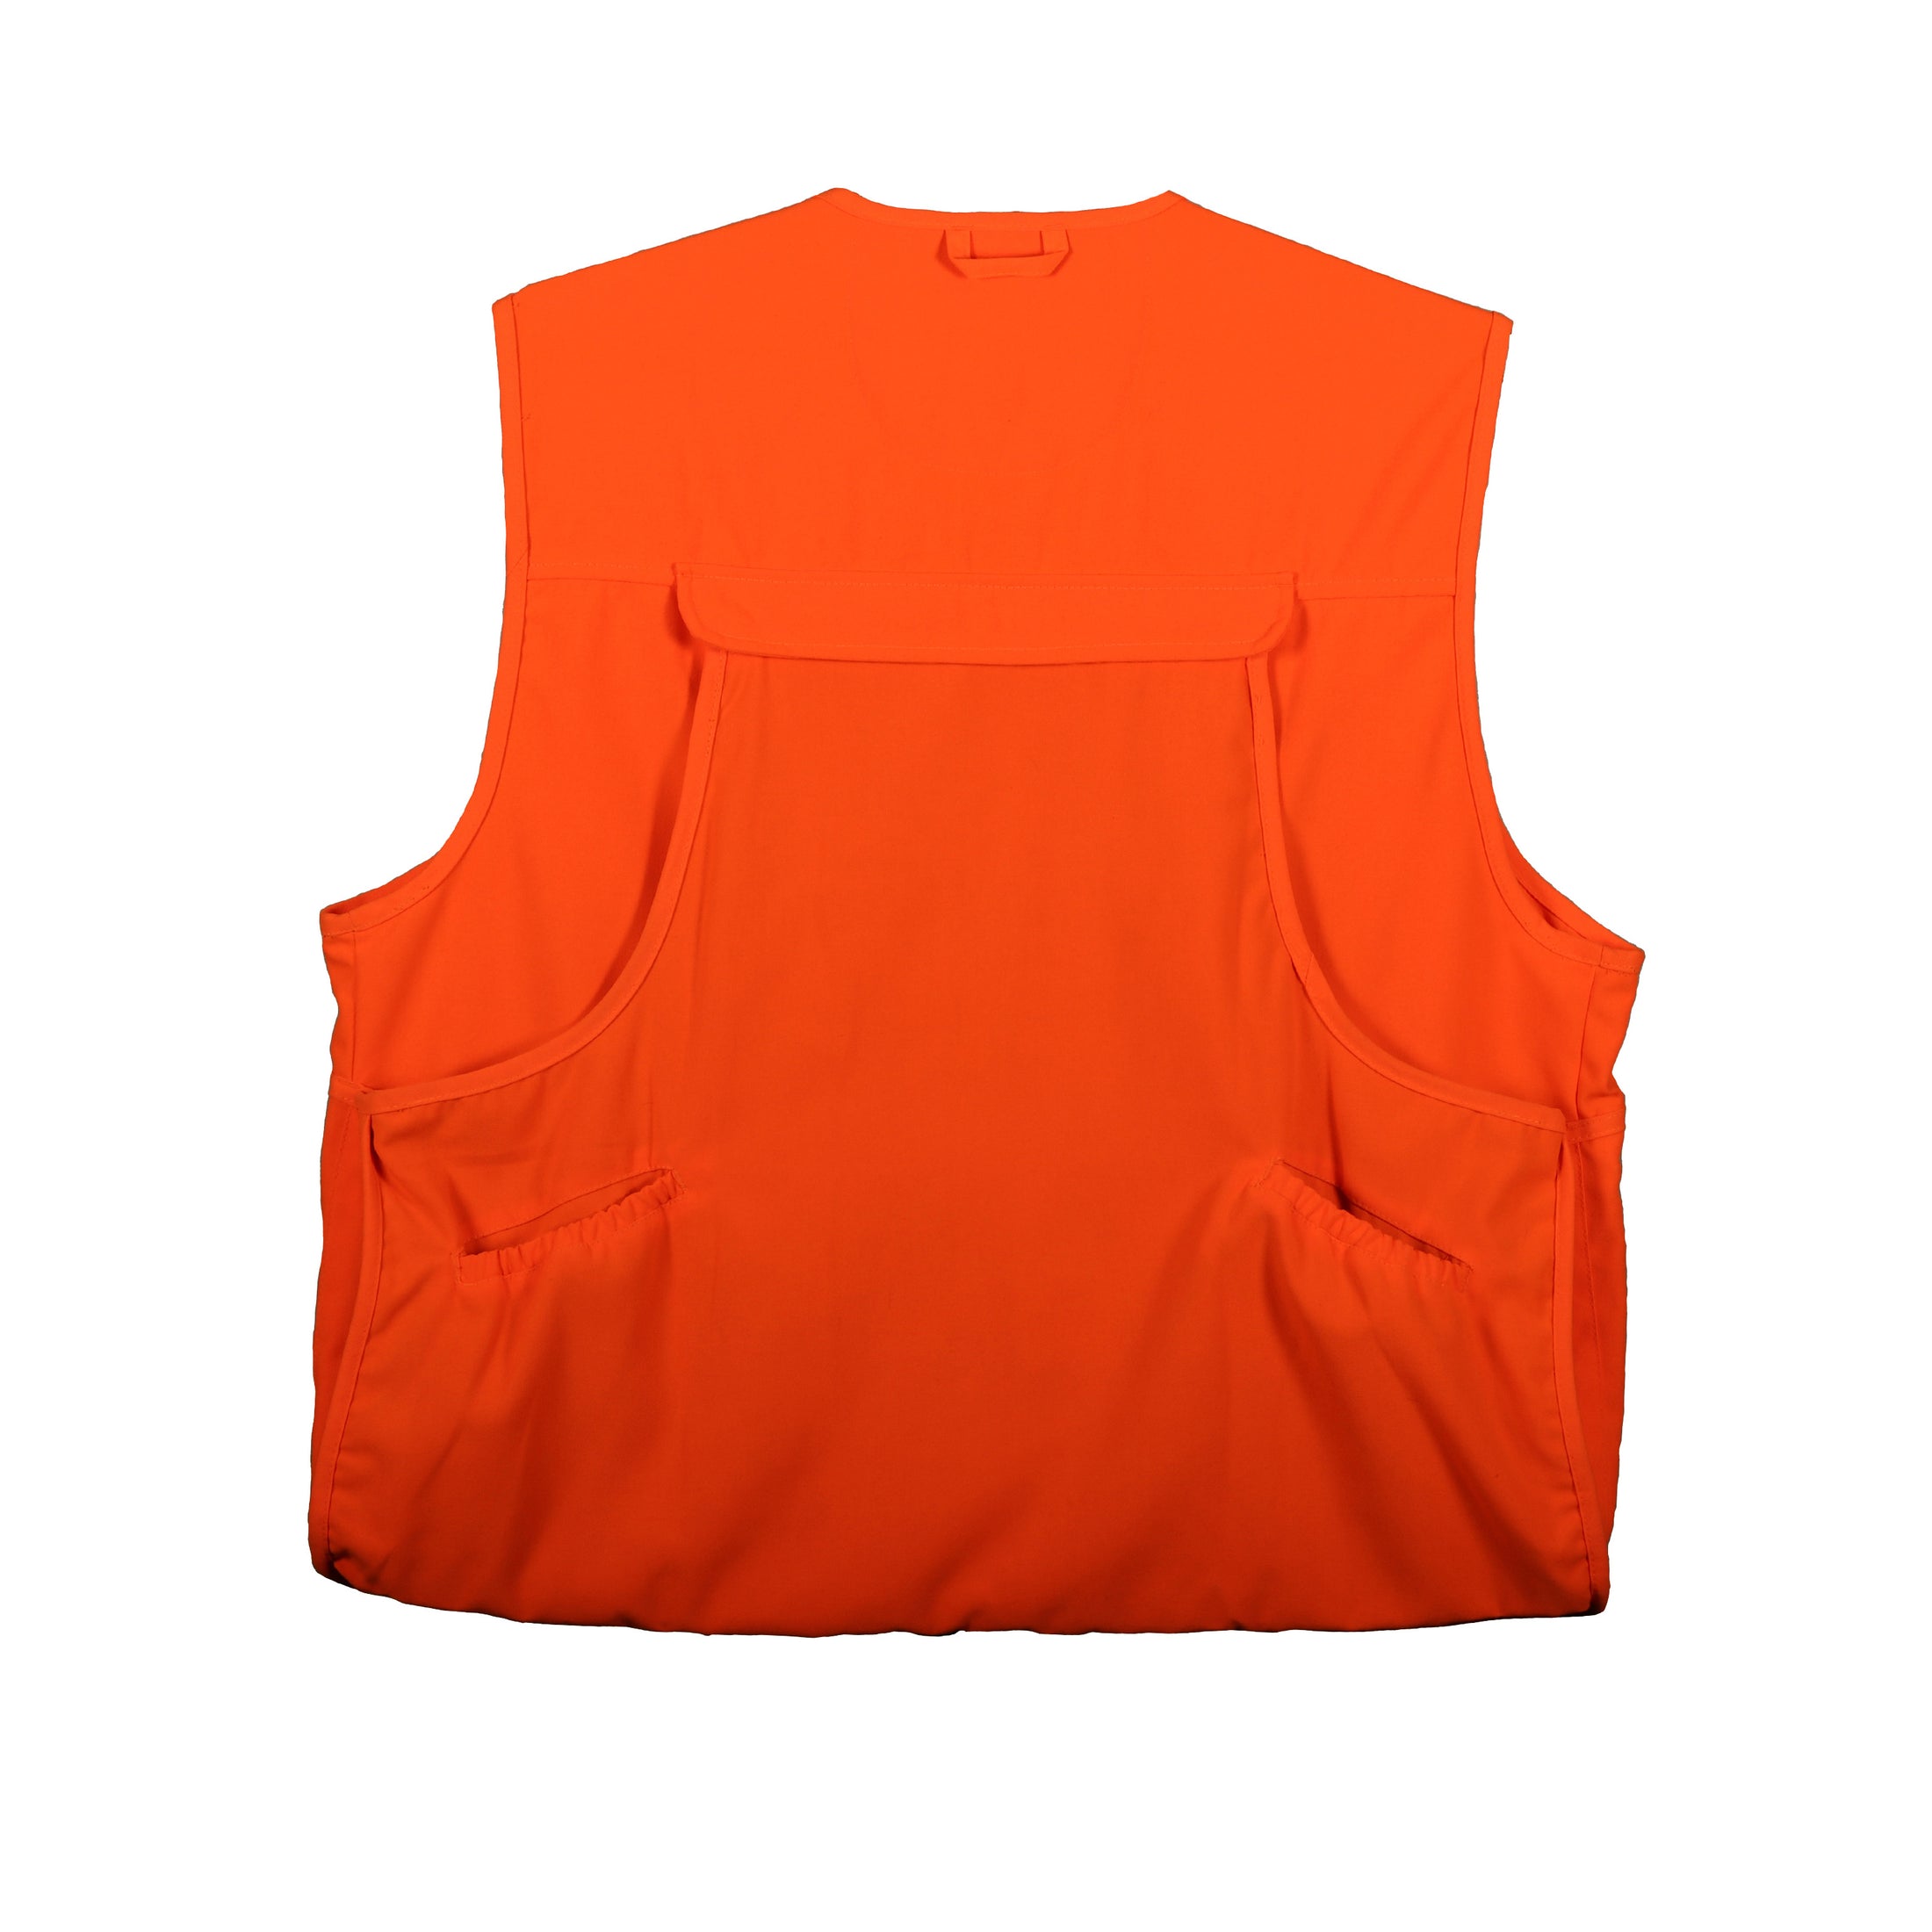 gamehide Pheasant Vest front (blaze orange)